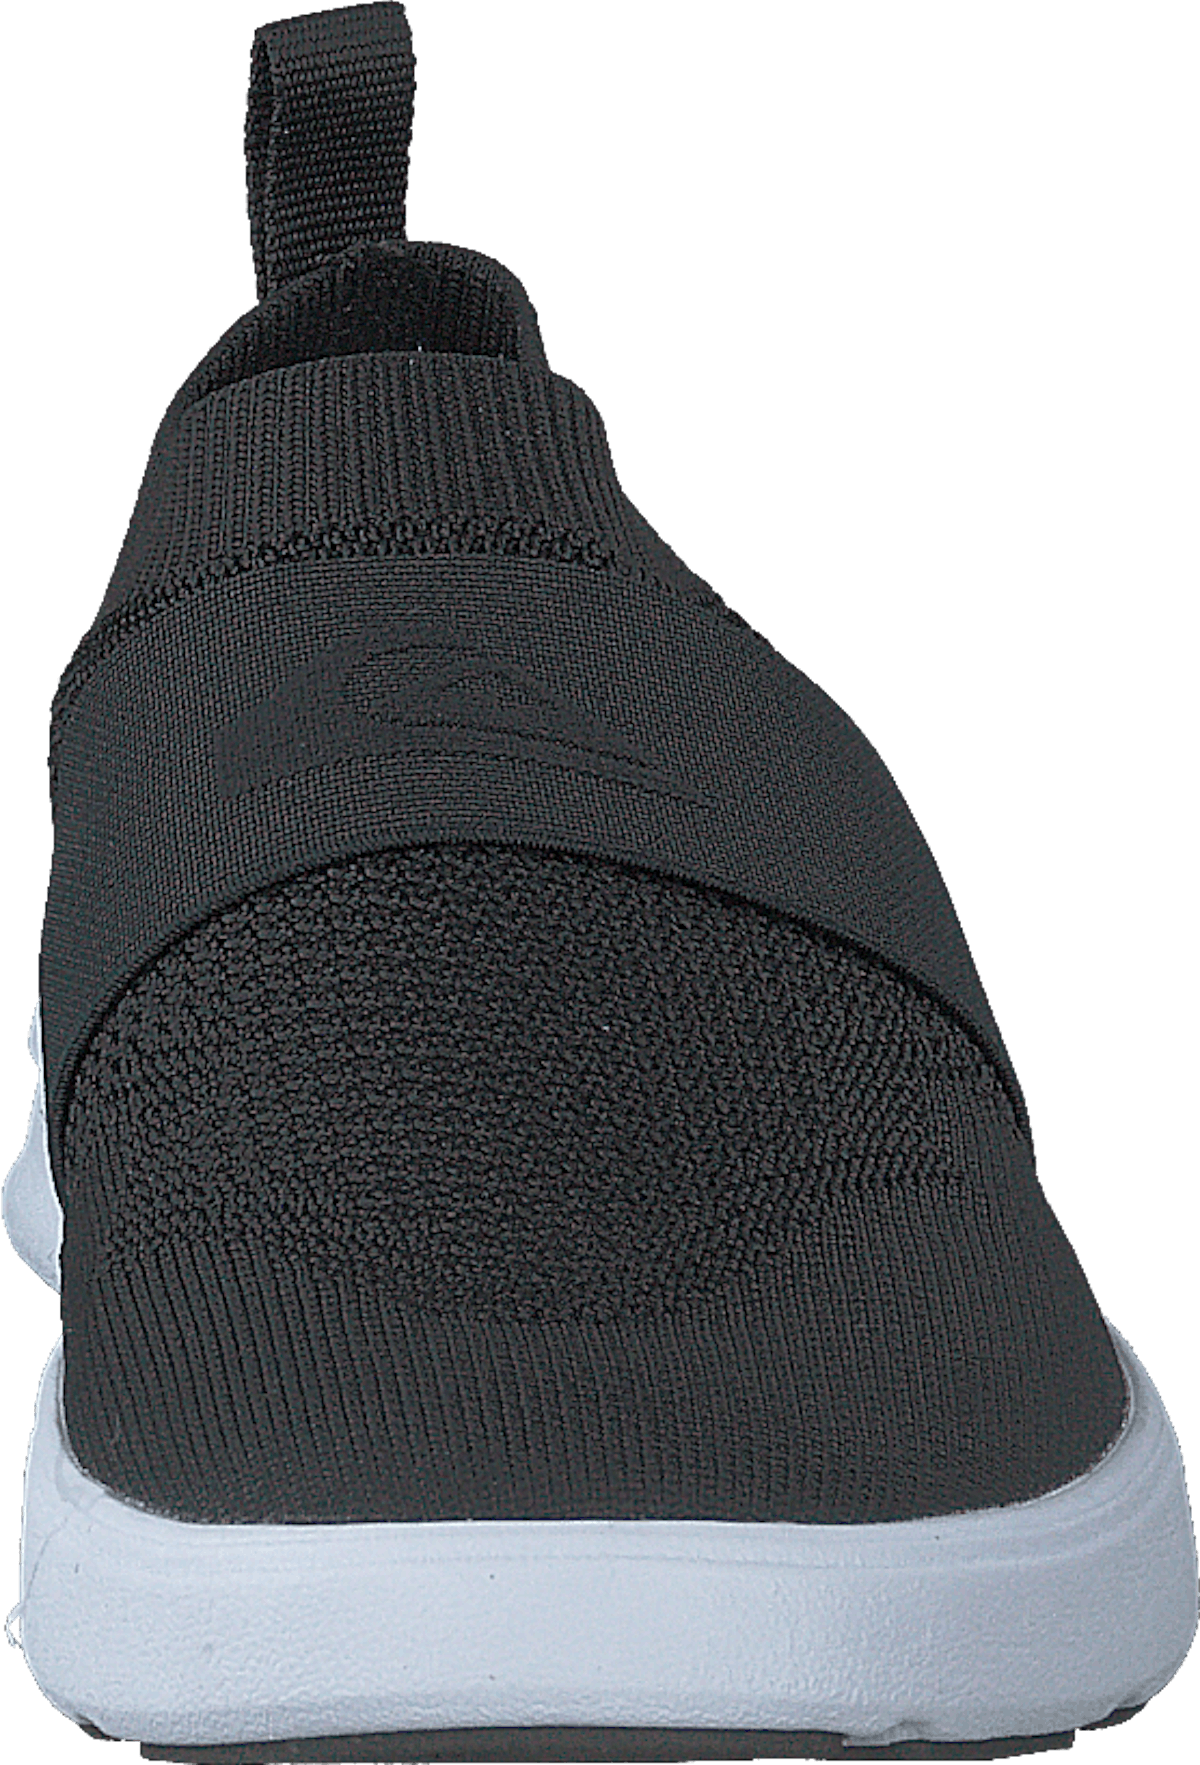 Amphibian Plus Slip-on Ii Black/grey/white